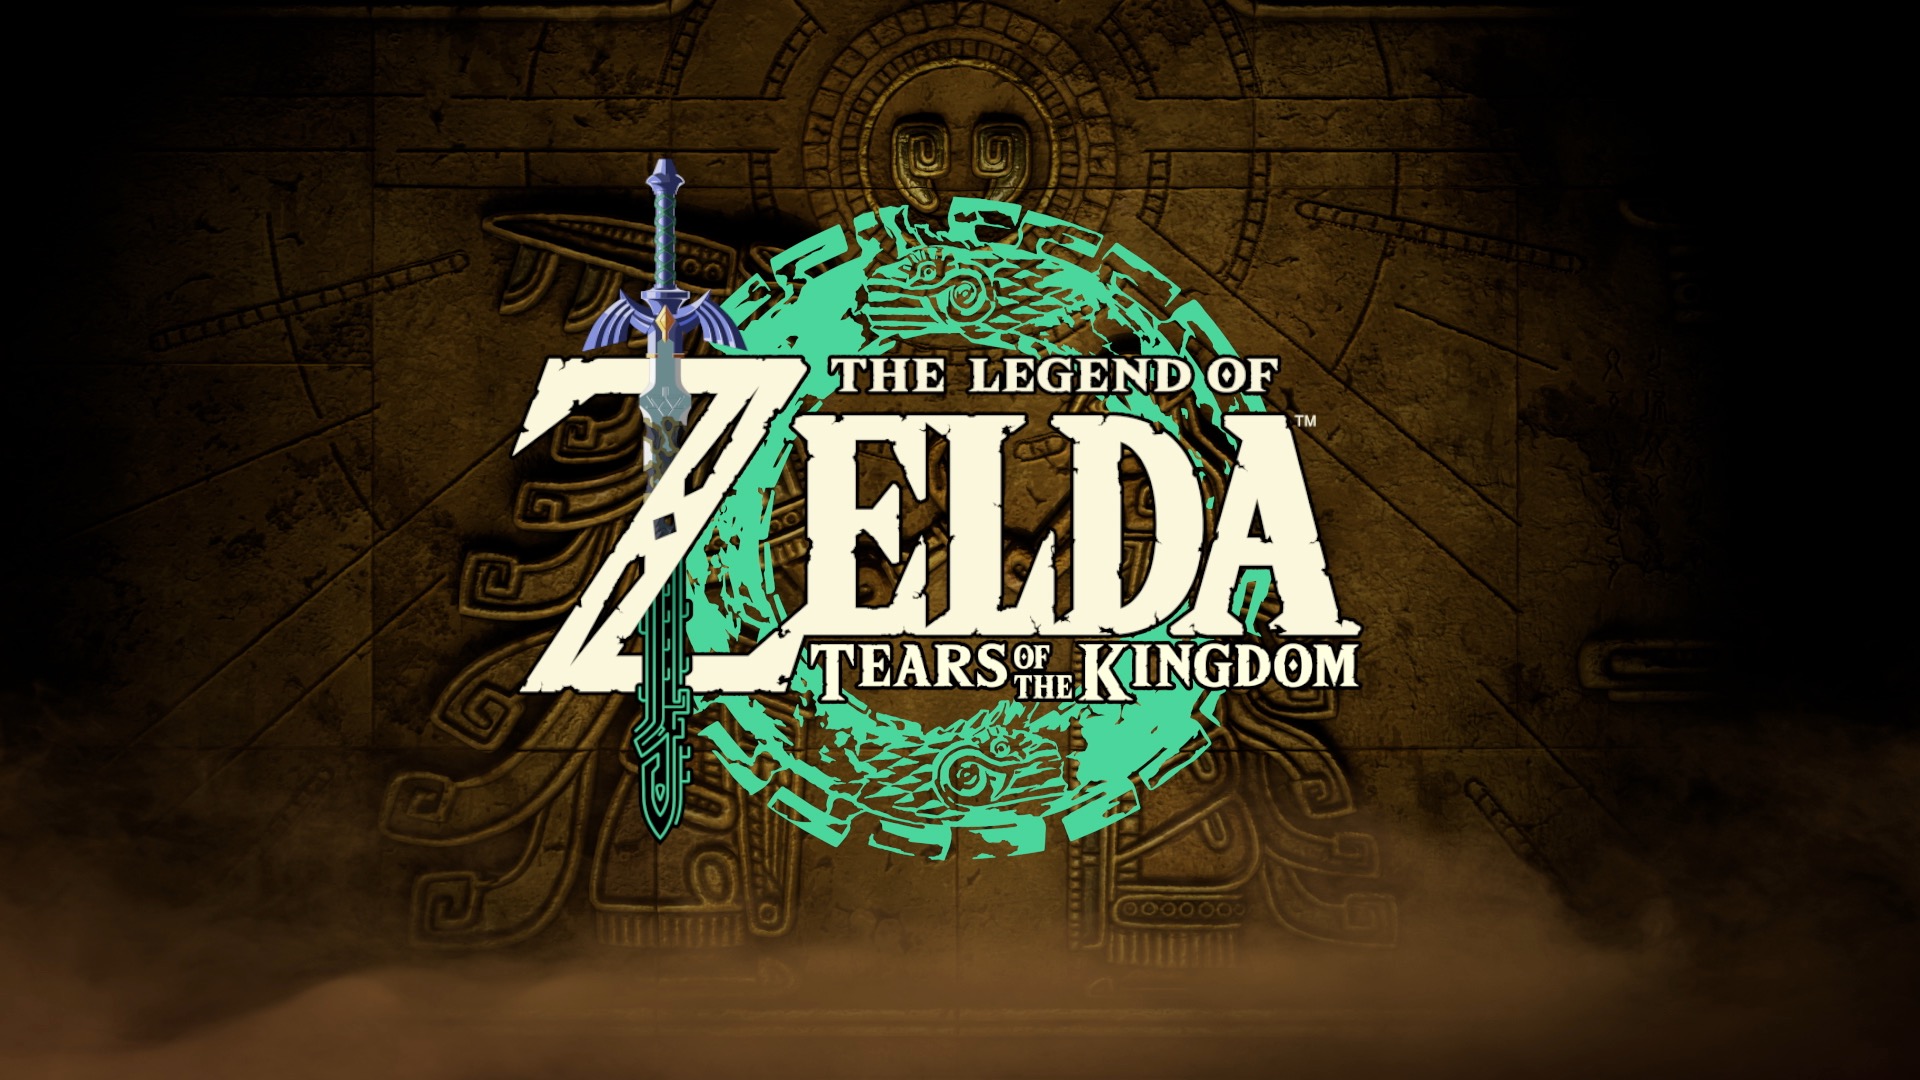 the legend of zelda tears of the kingdom screenshot 10